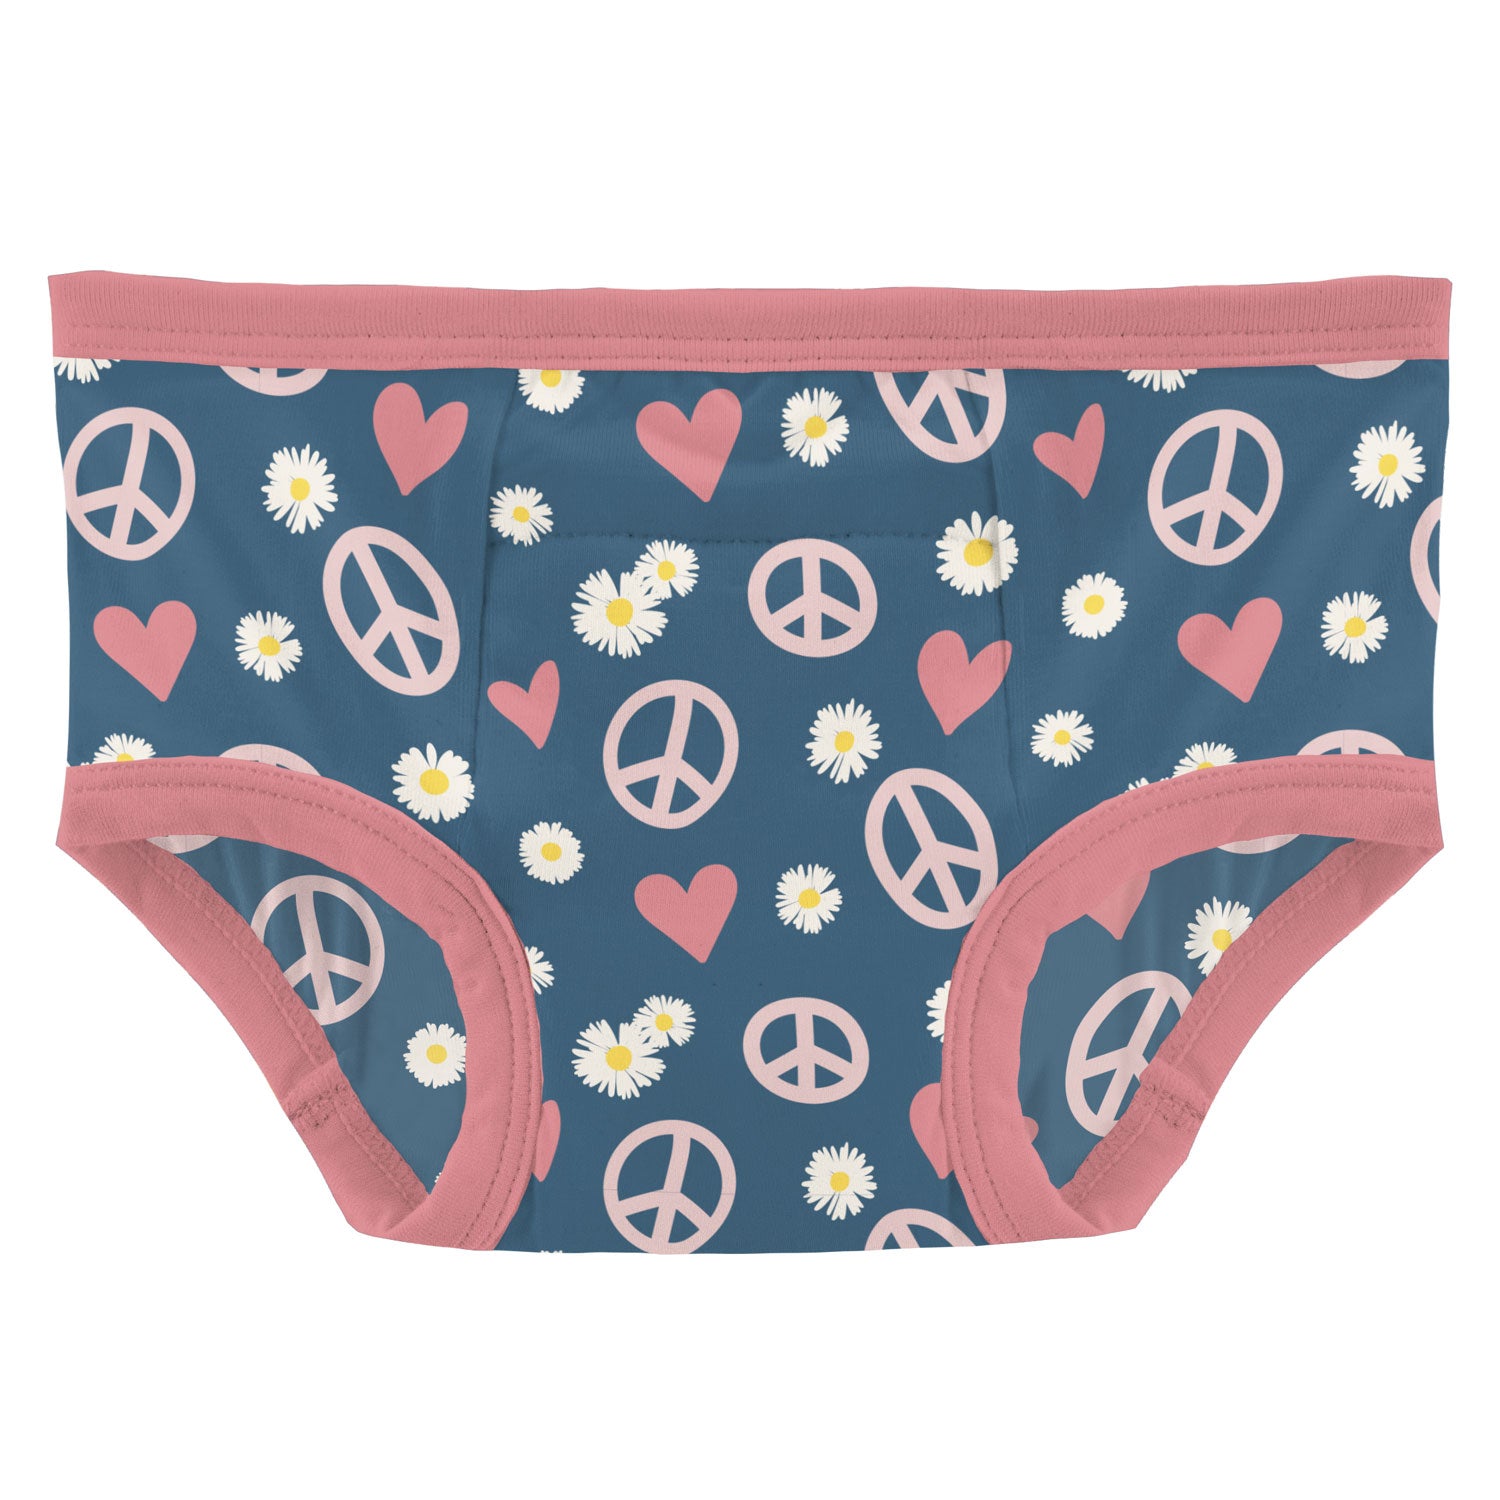 Kickee Pants Training Pants Set - Peace, Love and Happiness